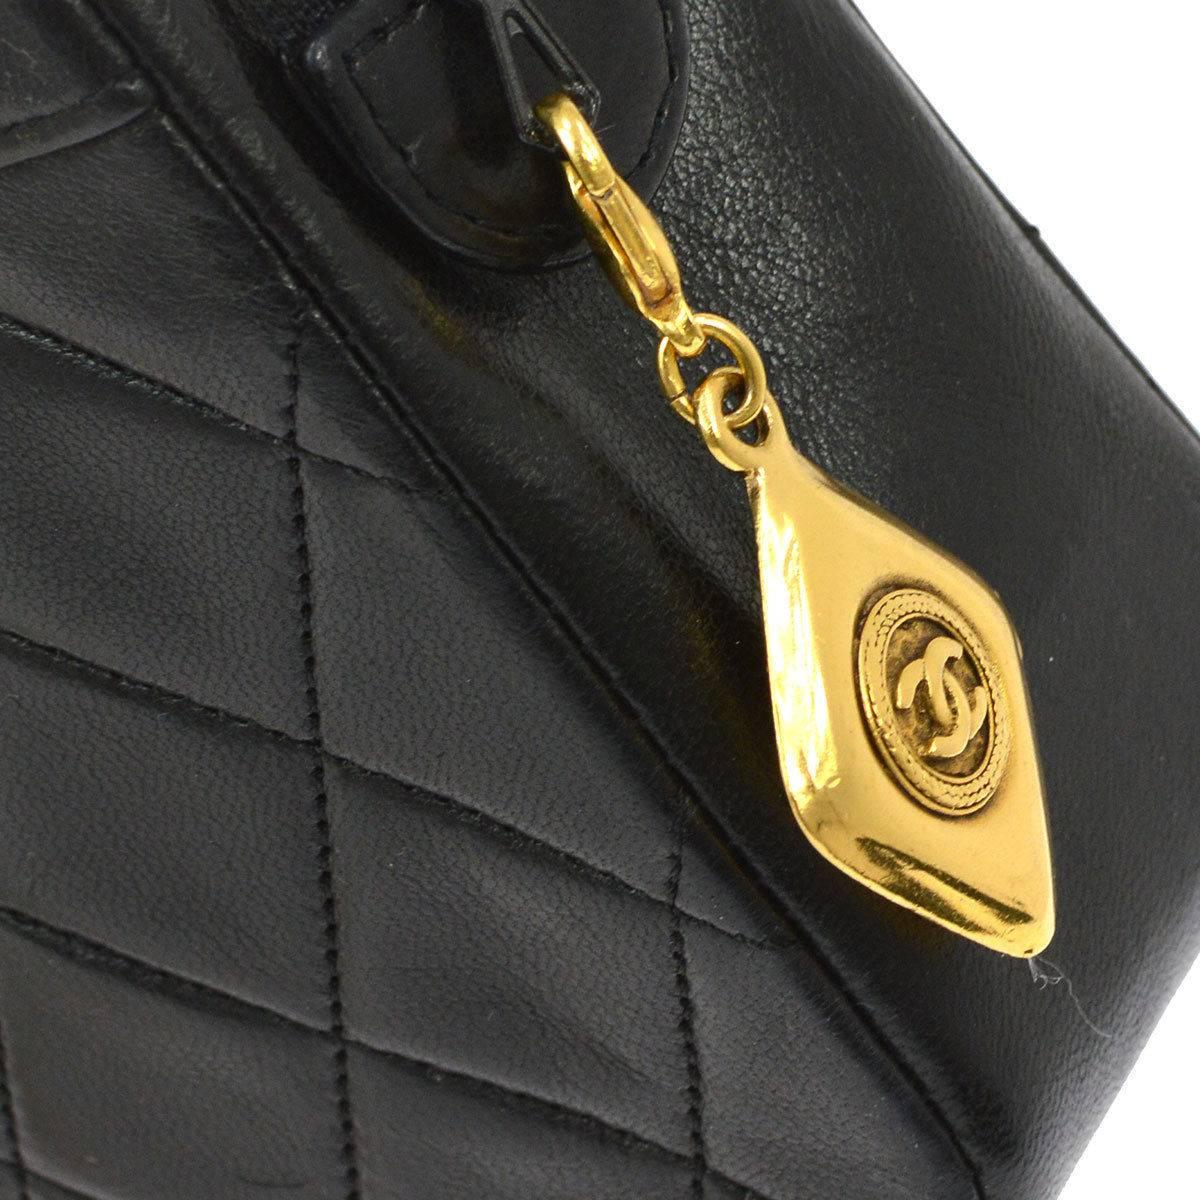 CURATOR'S NOTES

Chanel Black Lambskin Evening Top Handle Shoulder Bag .

Lambskin
Gold tone hardware
Zip closure
Date code 1279749
Made in France
Shoulder strap drop 9"
Measures 8" W x 6" H x 2" D 